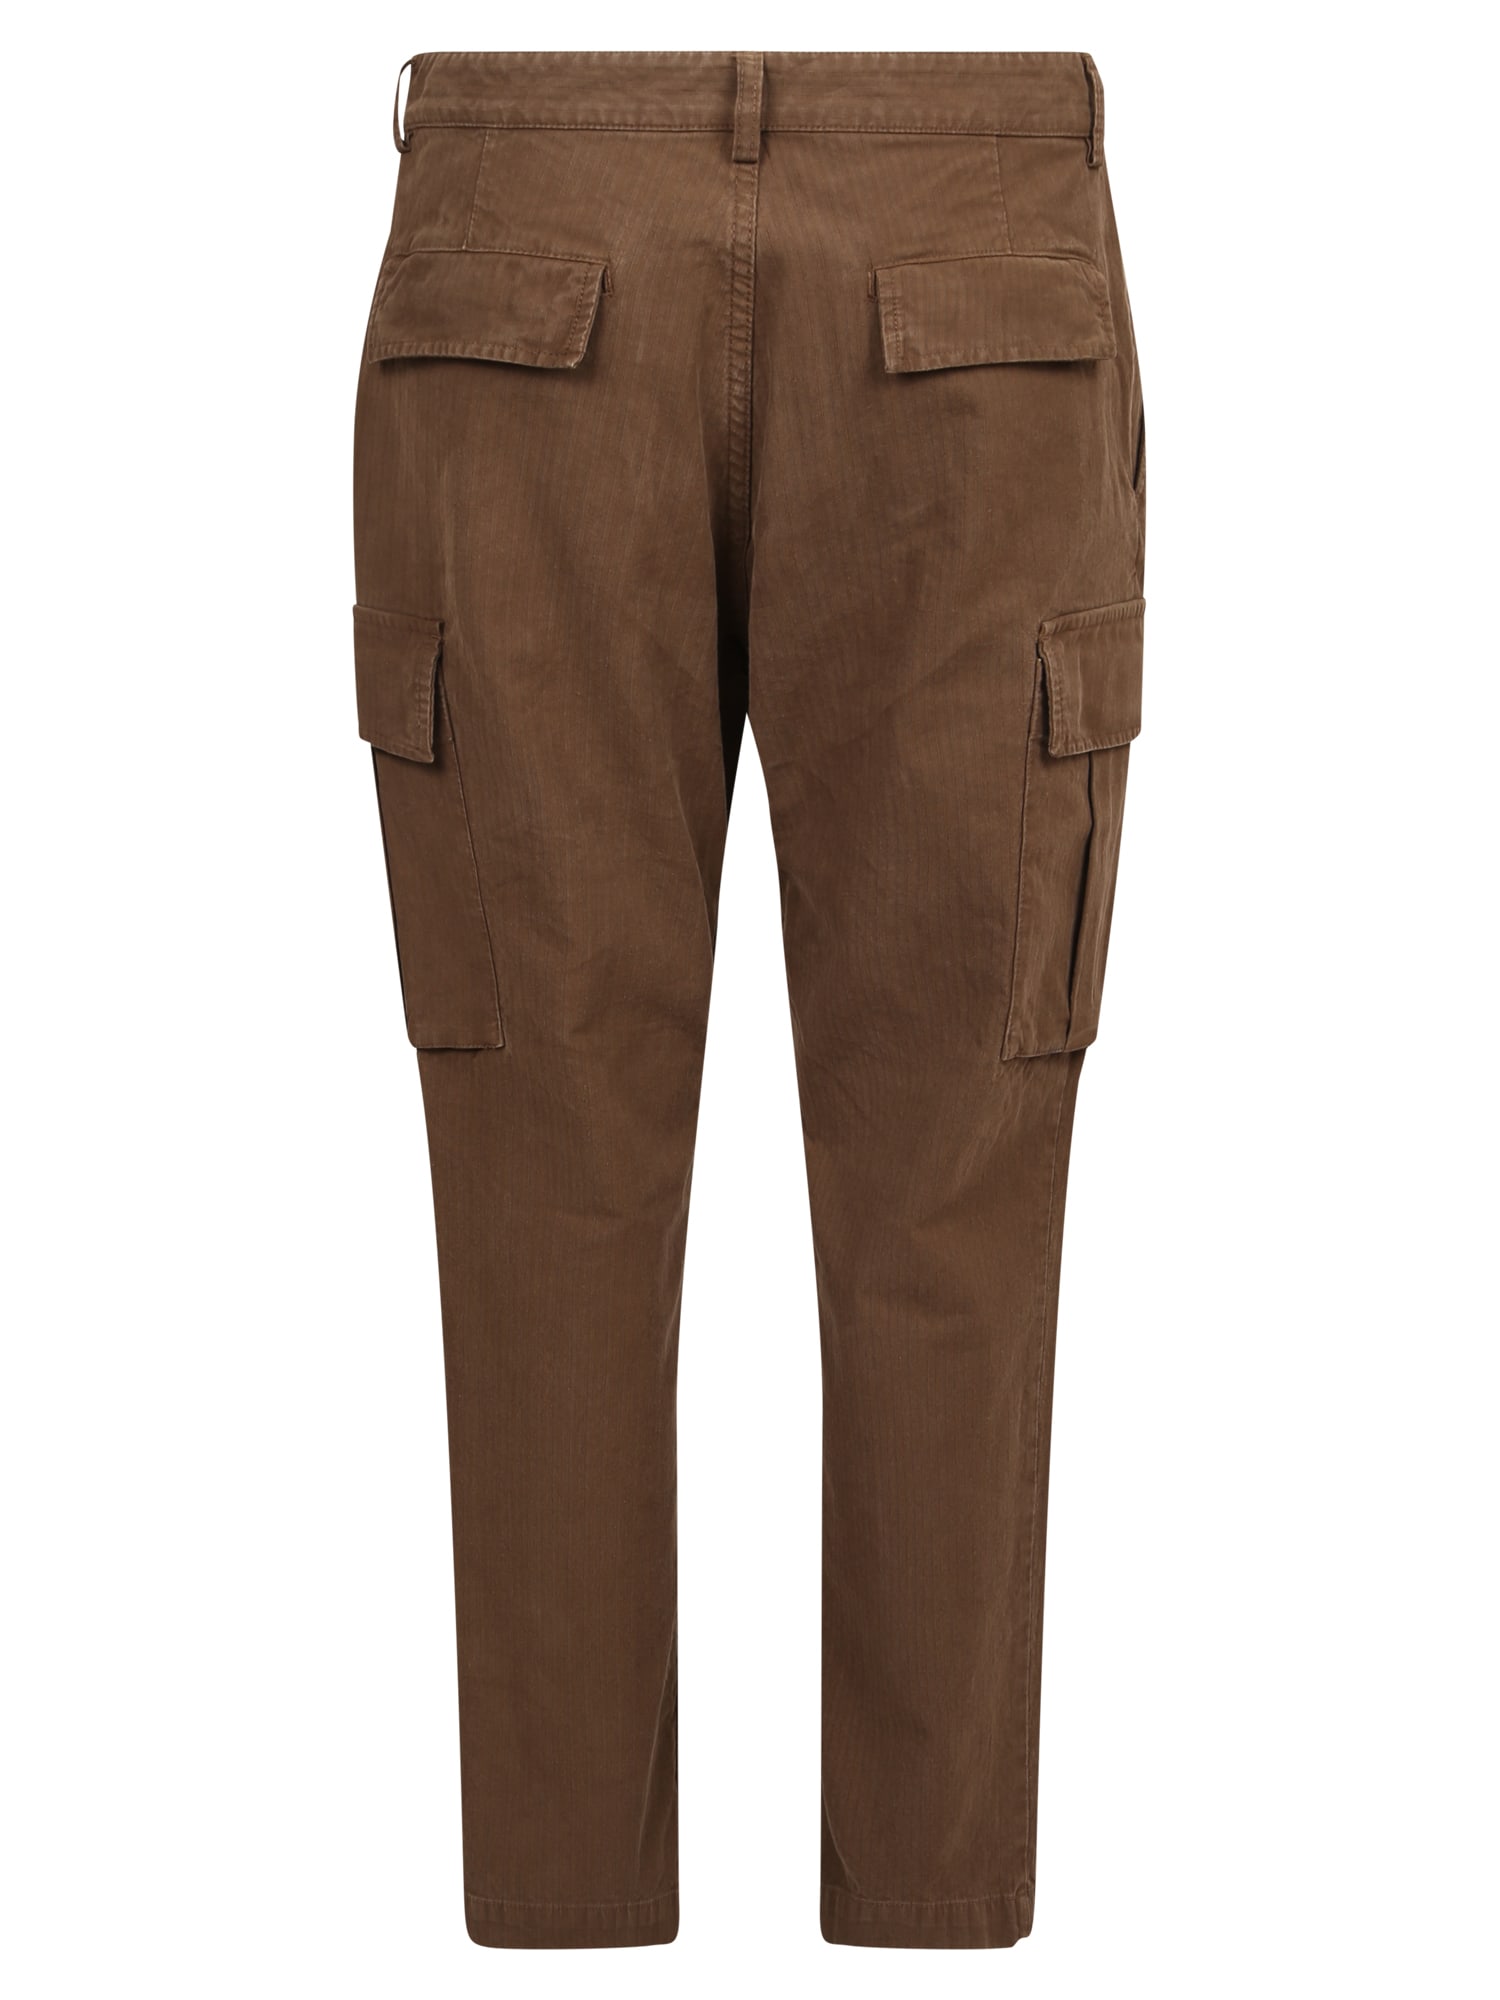 Shop Original Vintage Style Brown Trousers